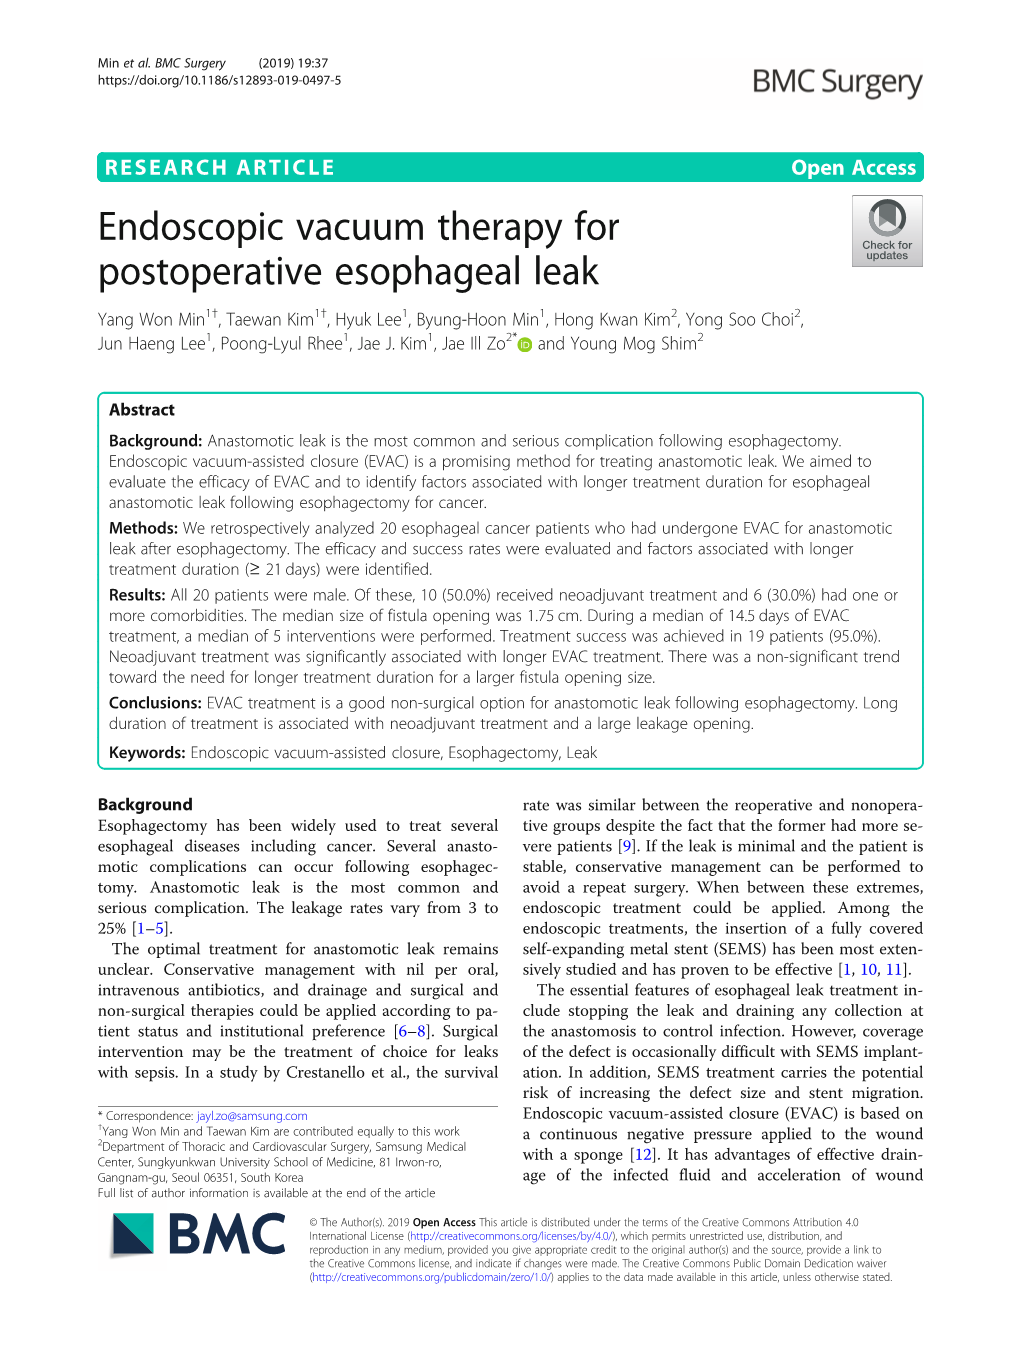 Endoscopic Vacuum Therapy for Postoperative Esophageal Leak